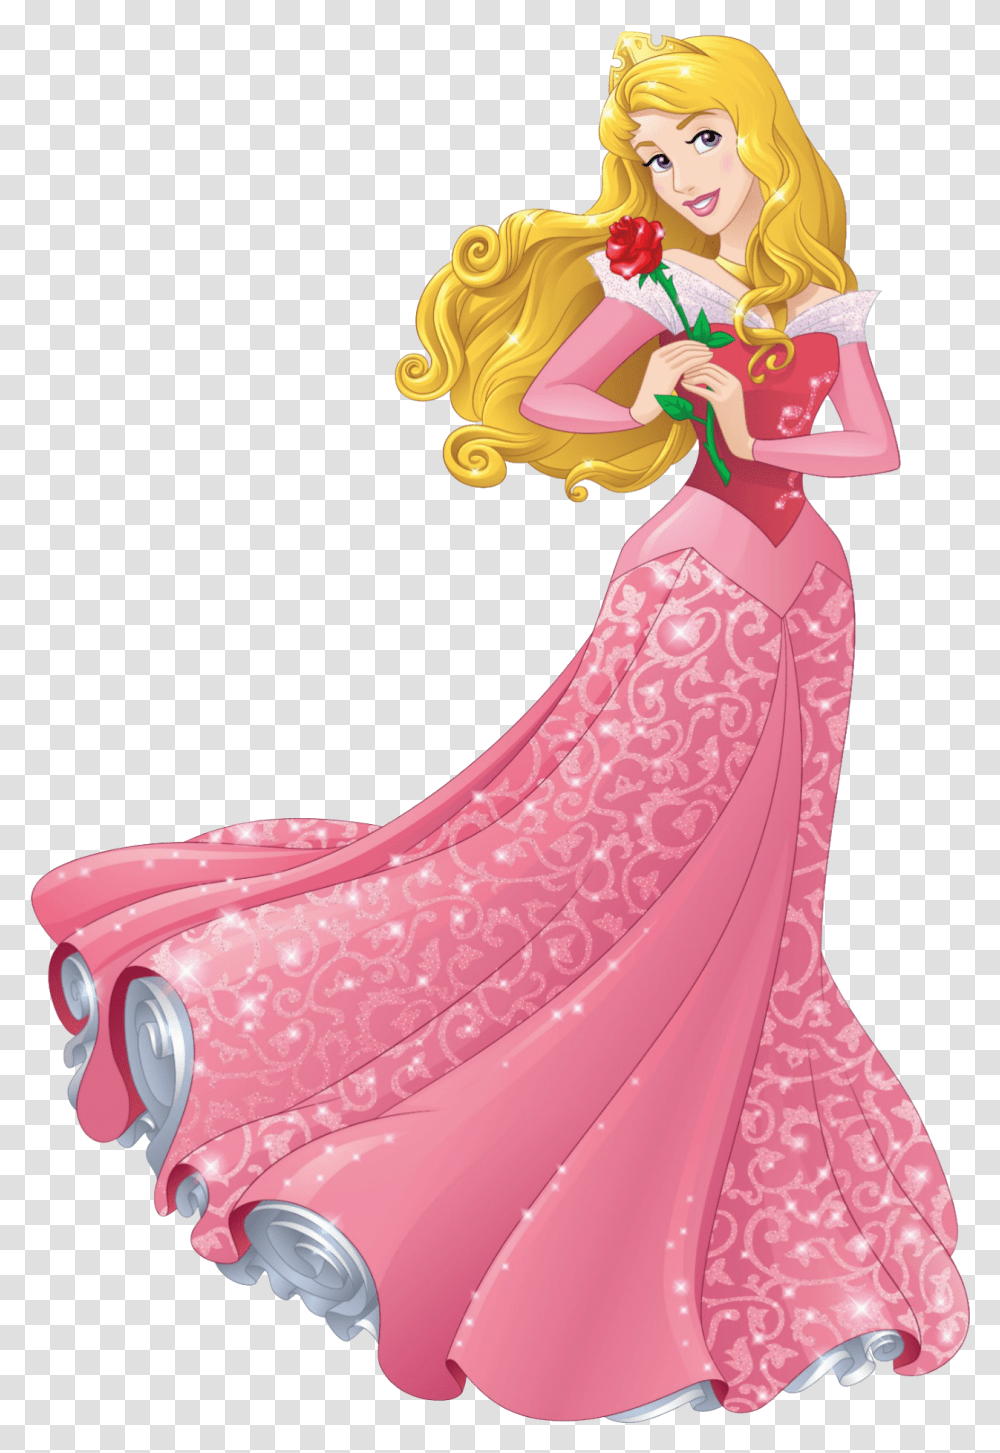 Download Princess Aurora Image For Designing Projects Disney Princess Aurora, Apparel, Figurine, Barbie Transparent Png